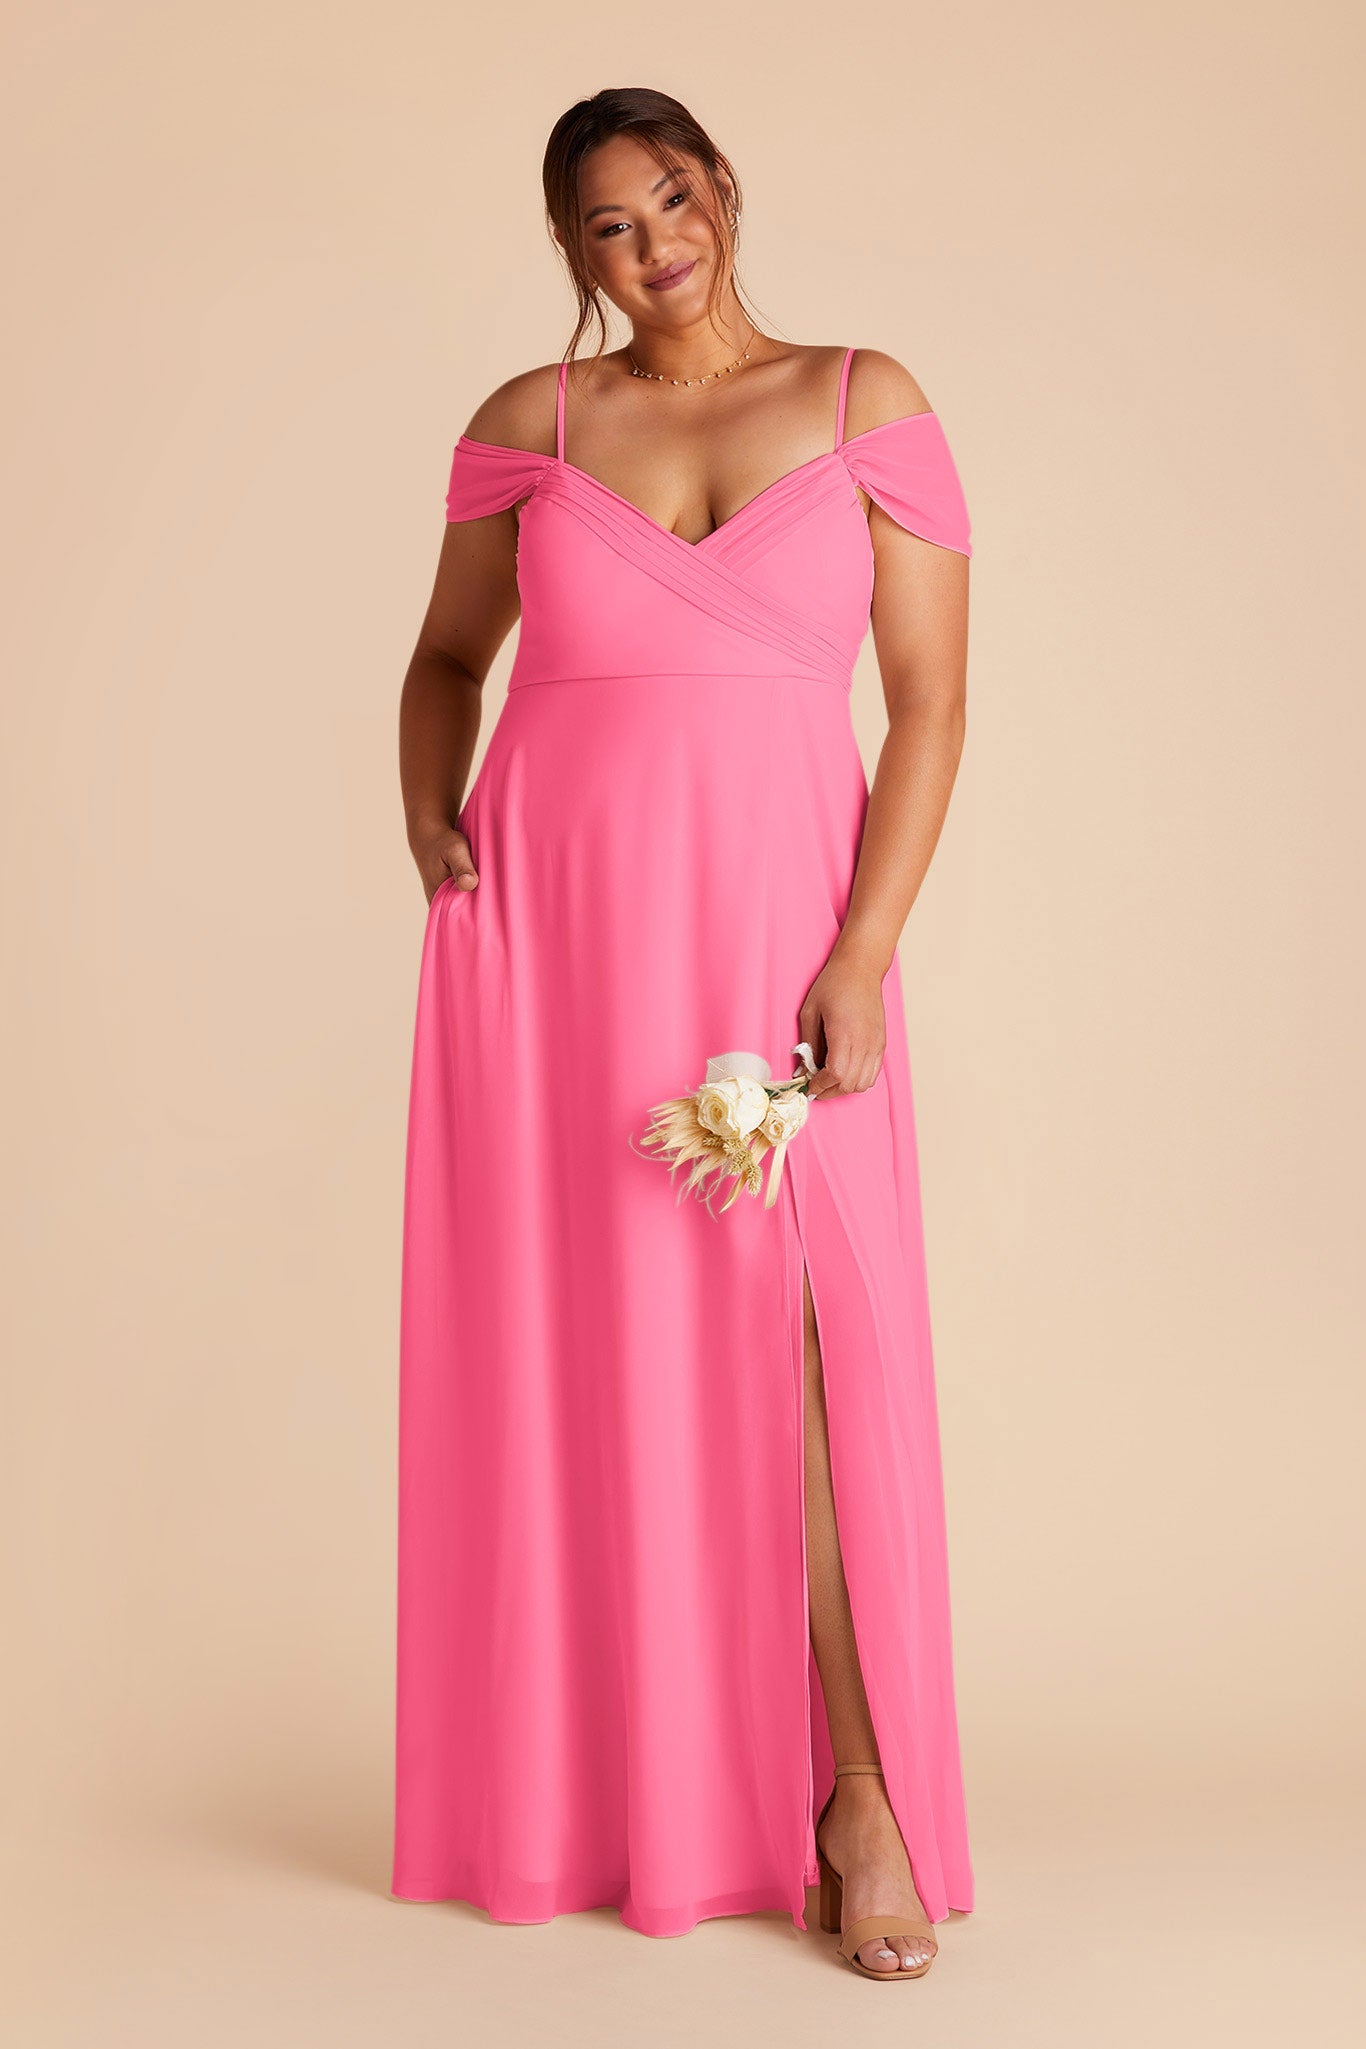 Bon Bon Pink Spence Convertible Dress by Birdy Grey